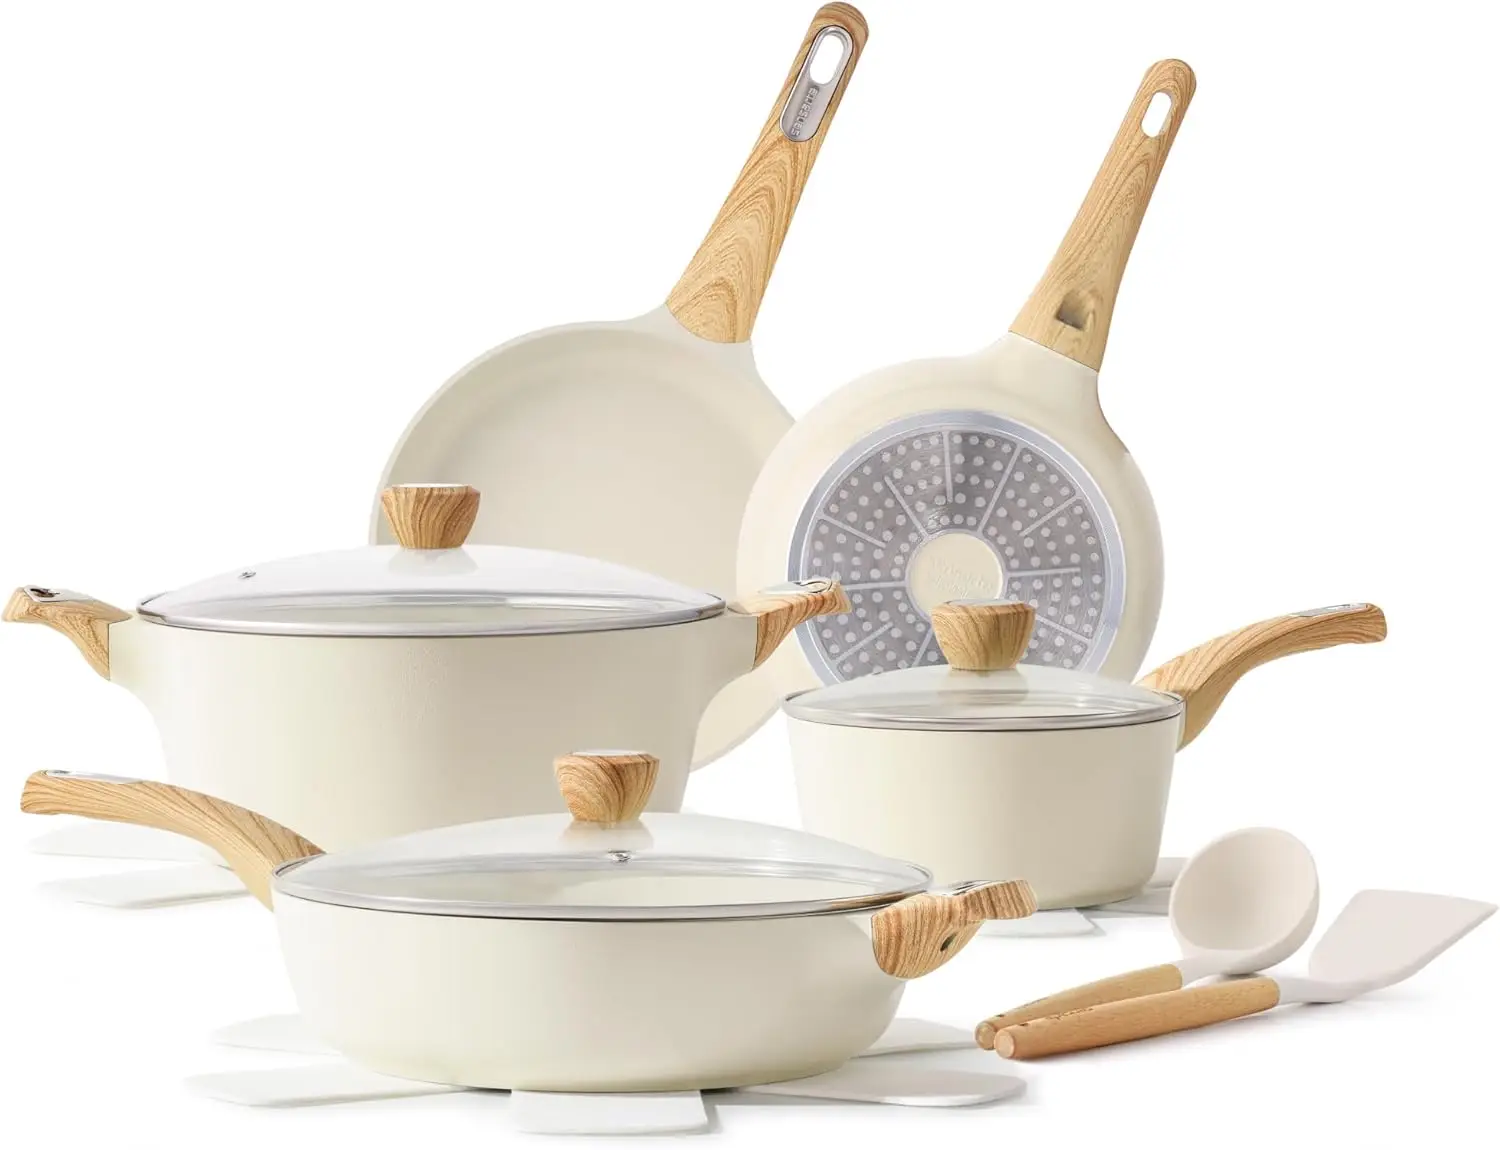 

SENSARTE Ceramic Pots and Pans Set Nonstick, Kitchen Cookware Sets, 14-Piece Induction Cookware, 100% Non-toxic Healthy Non